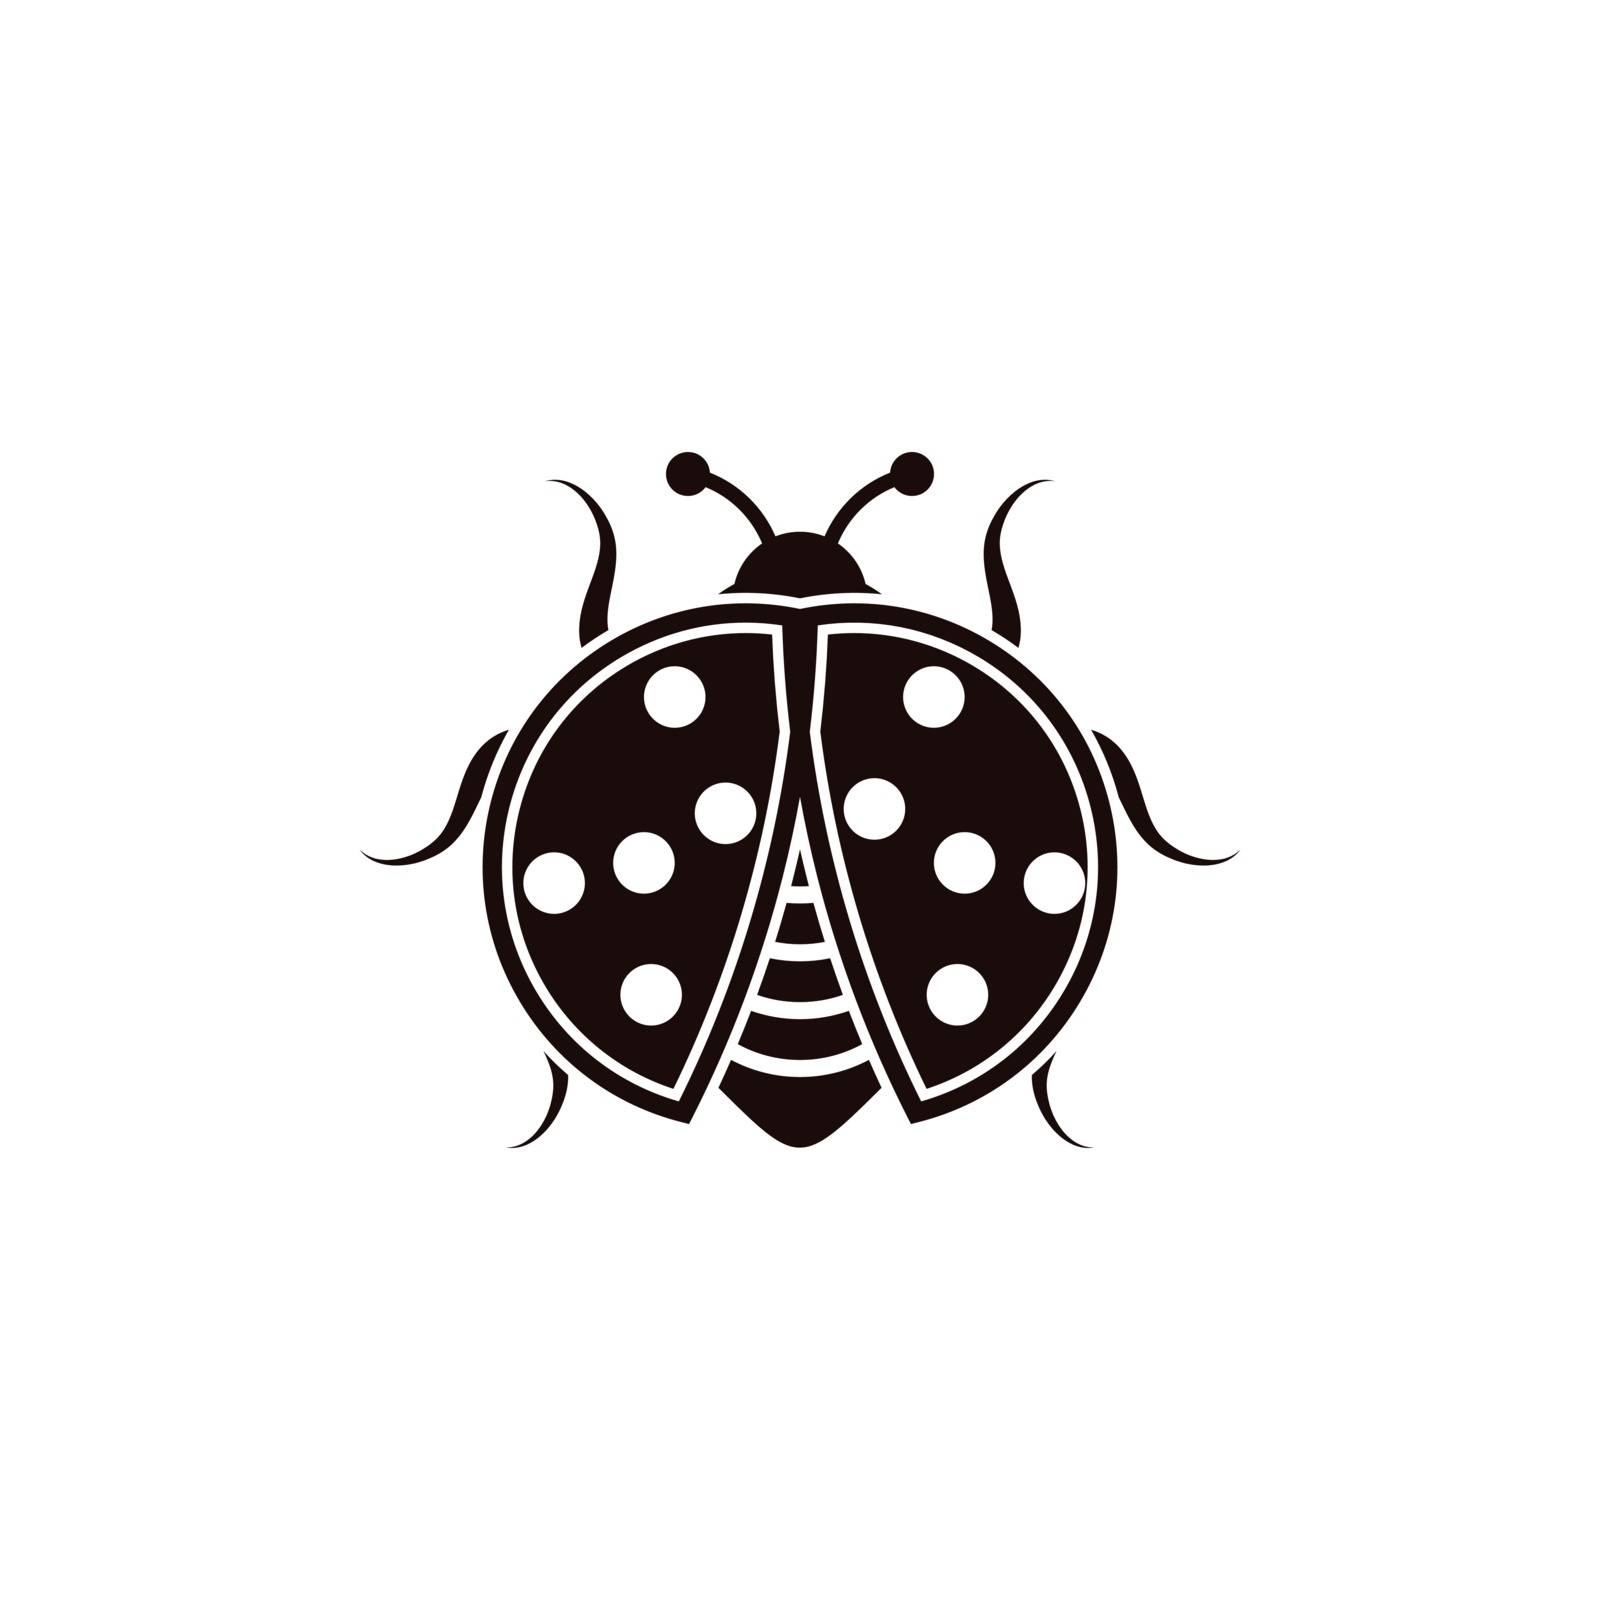 Beauty bug vector illustration icon by Elaelo